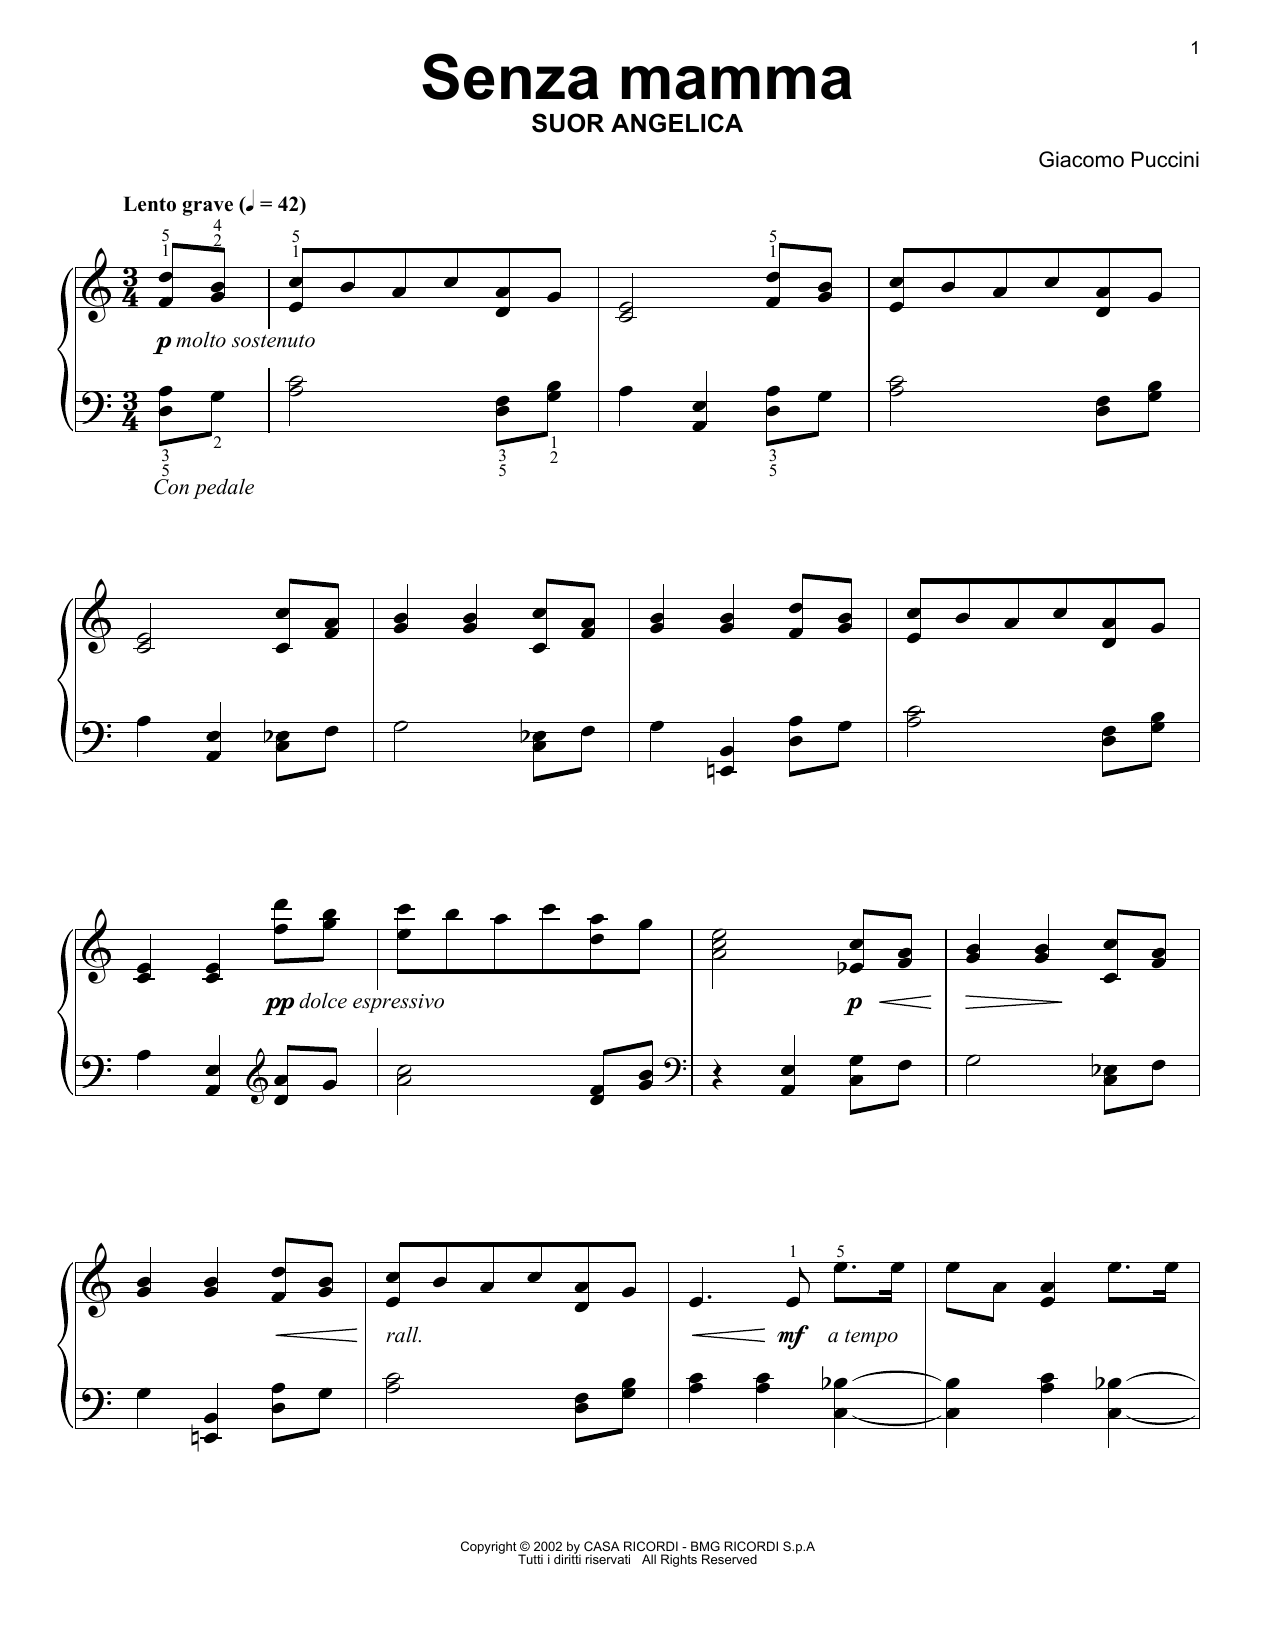 Giacomo Puccini Senza Mamma Sheet Music Notes & Chords for Piano Solo - Download or Print PDF